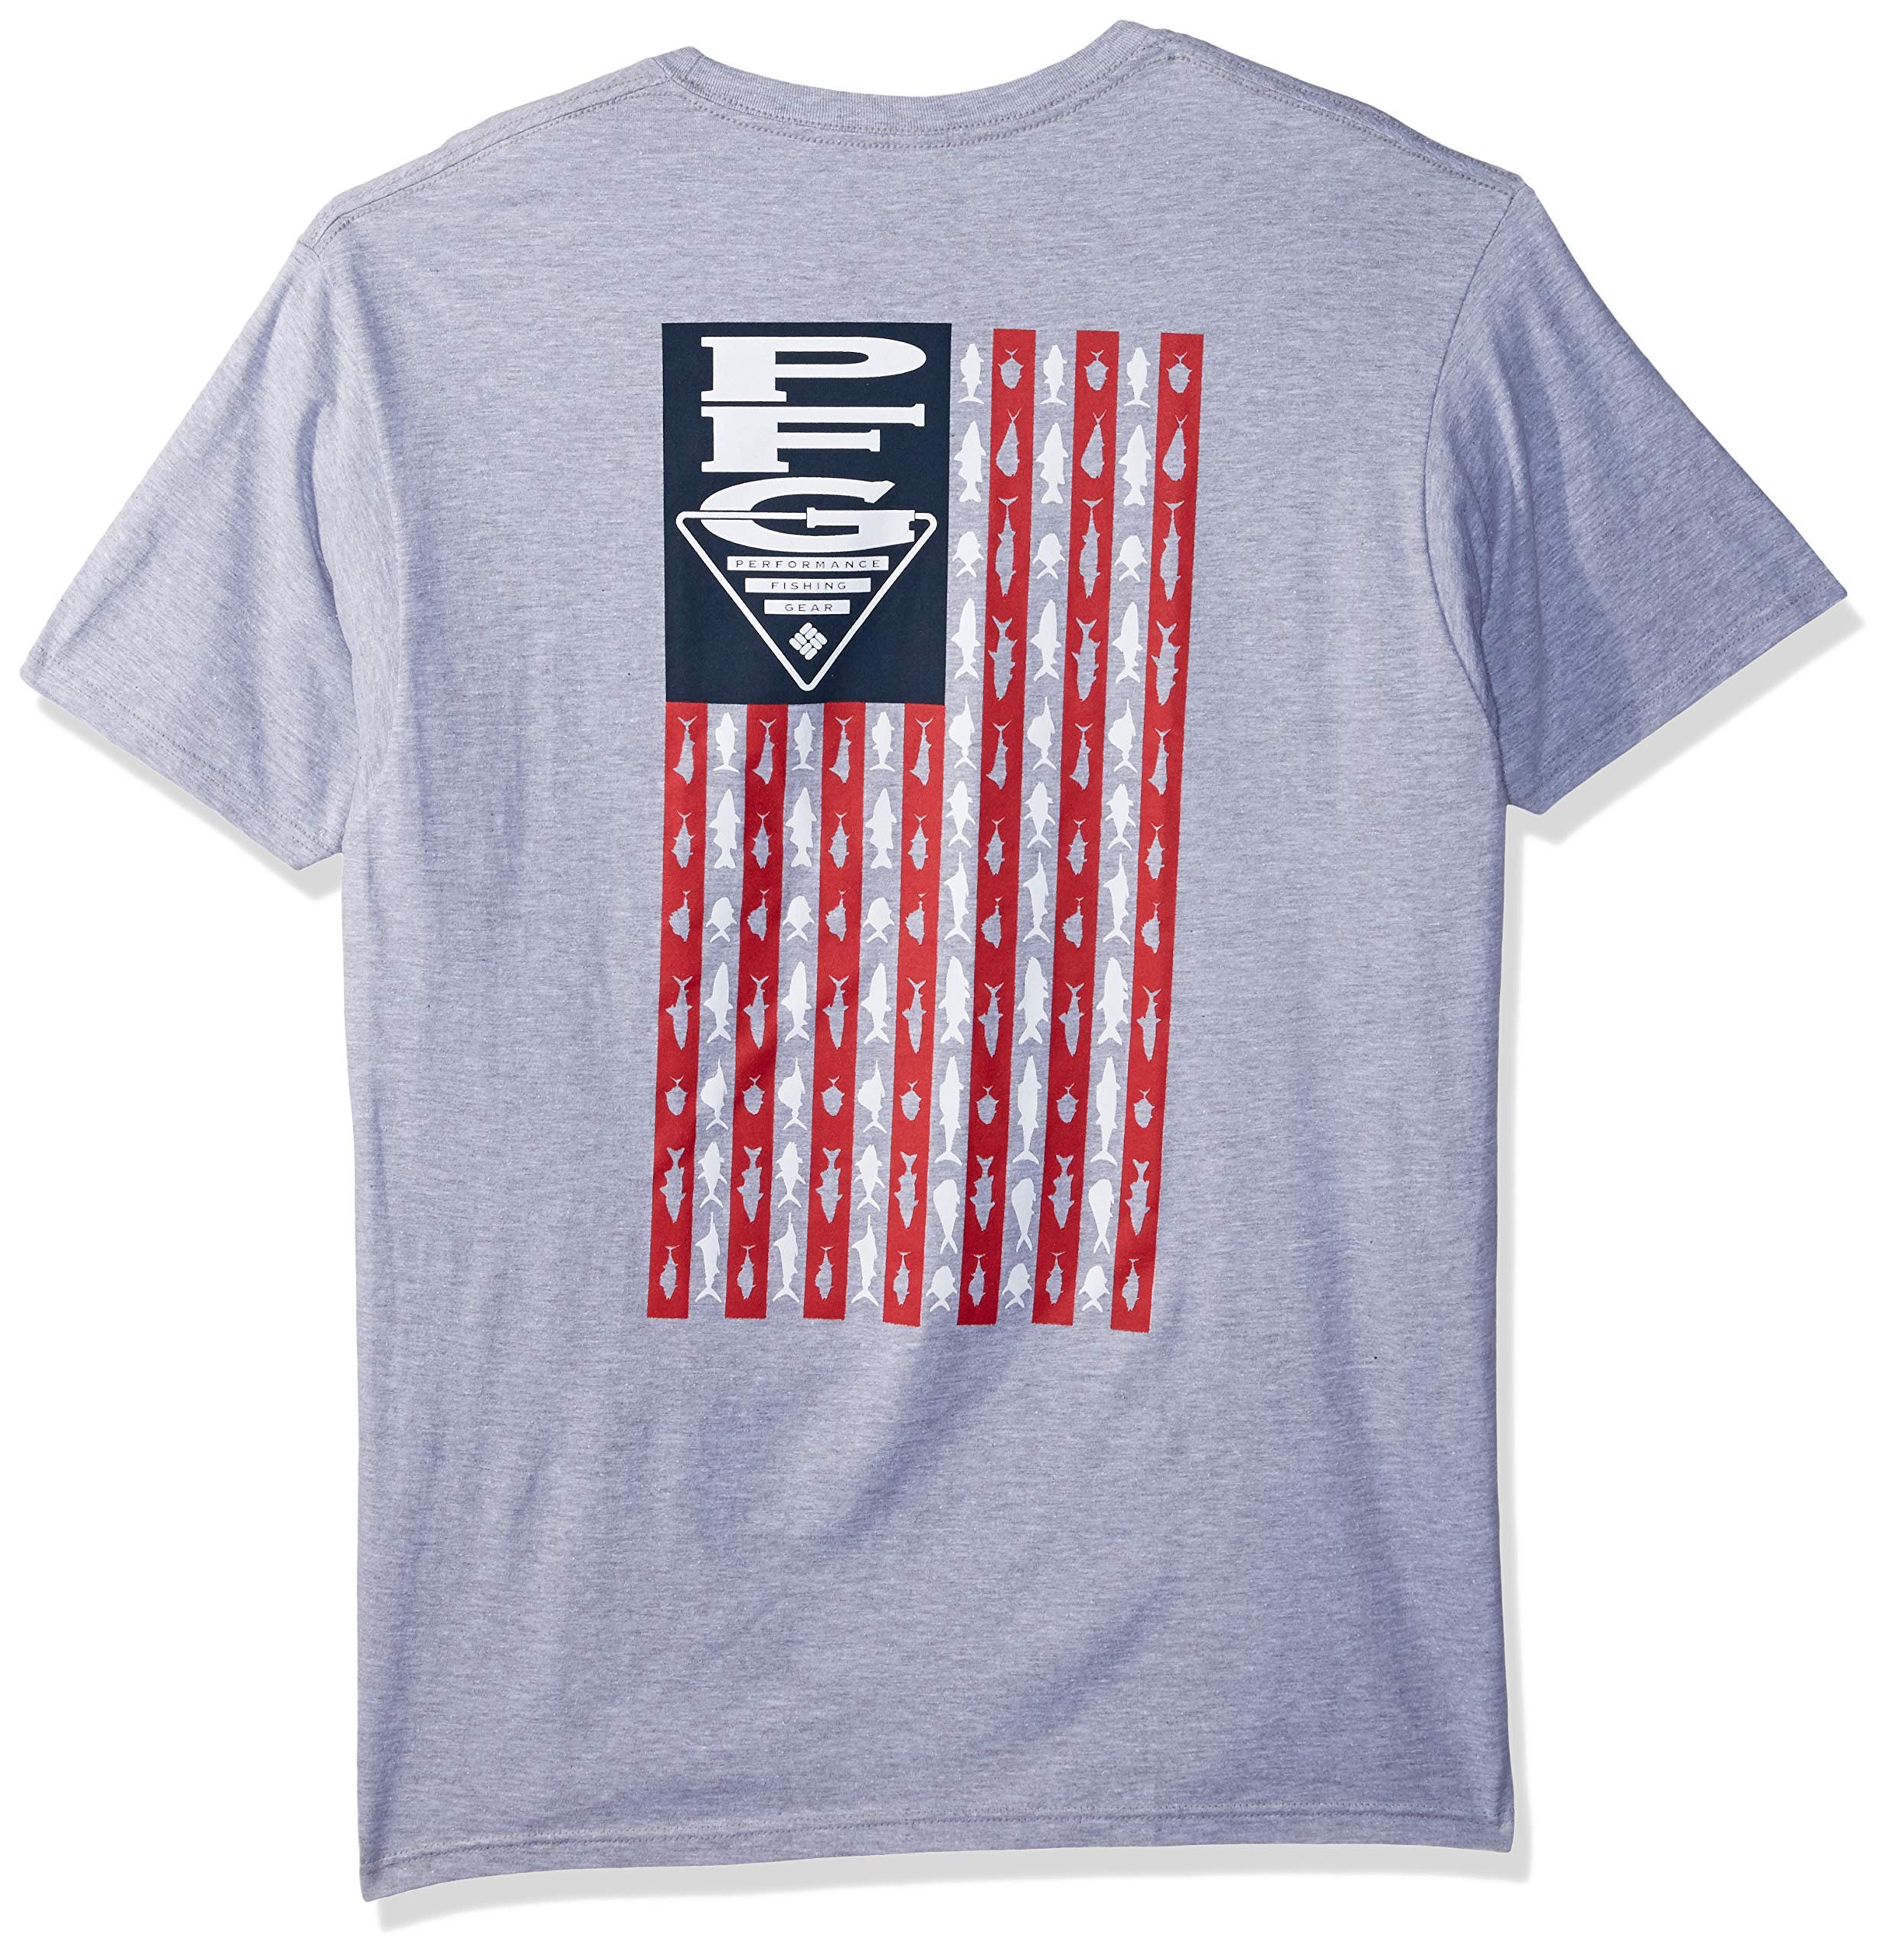 Columbia Apparel Men's PFG Graphic T-Shirt Shirt, Grey Heather/Nation, Medium